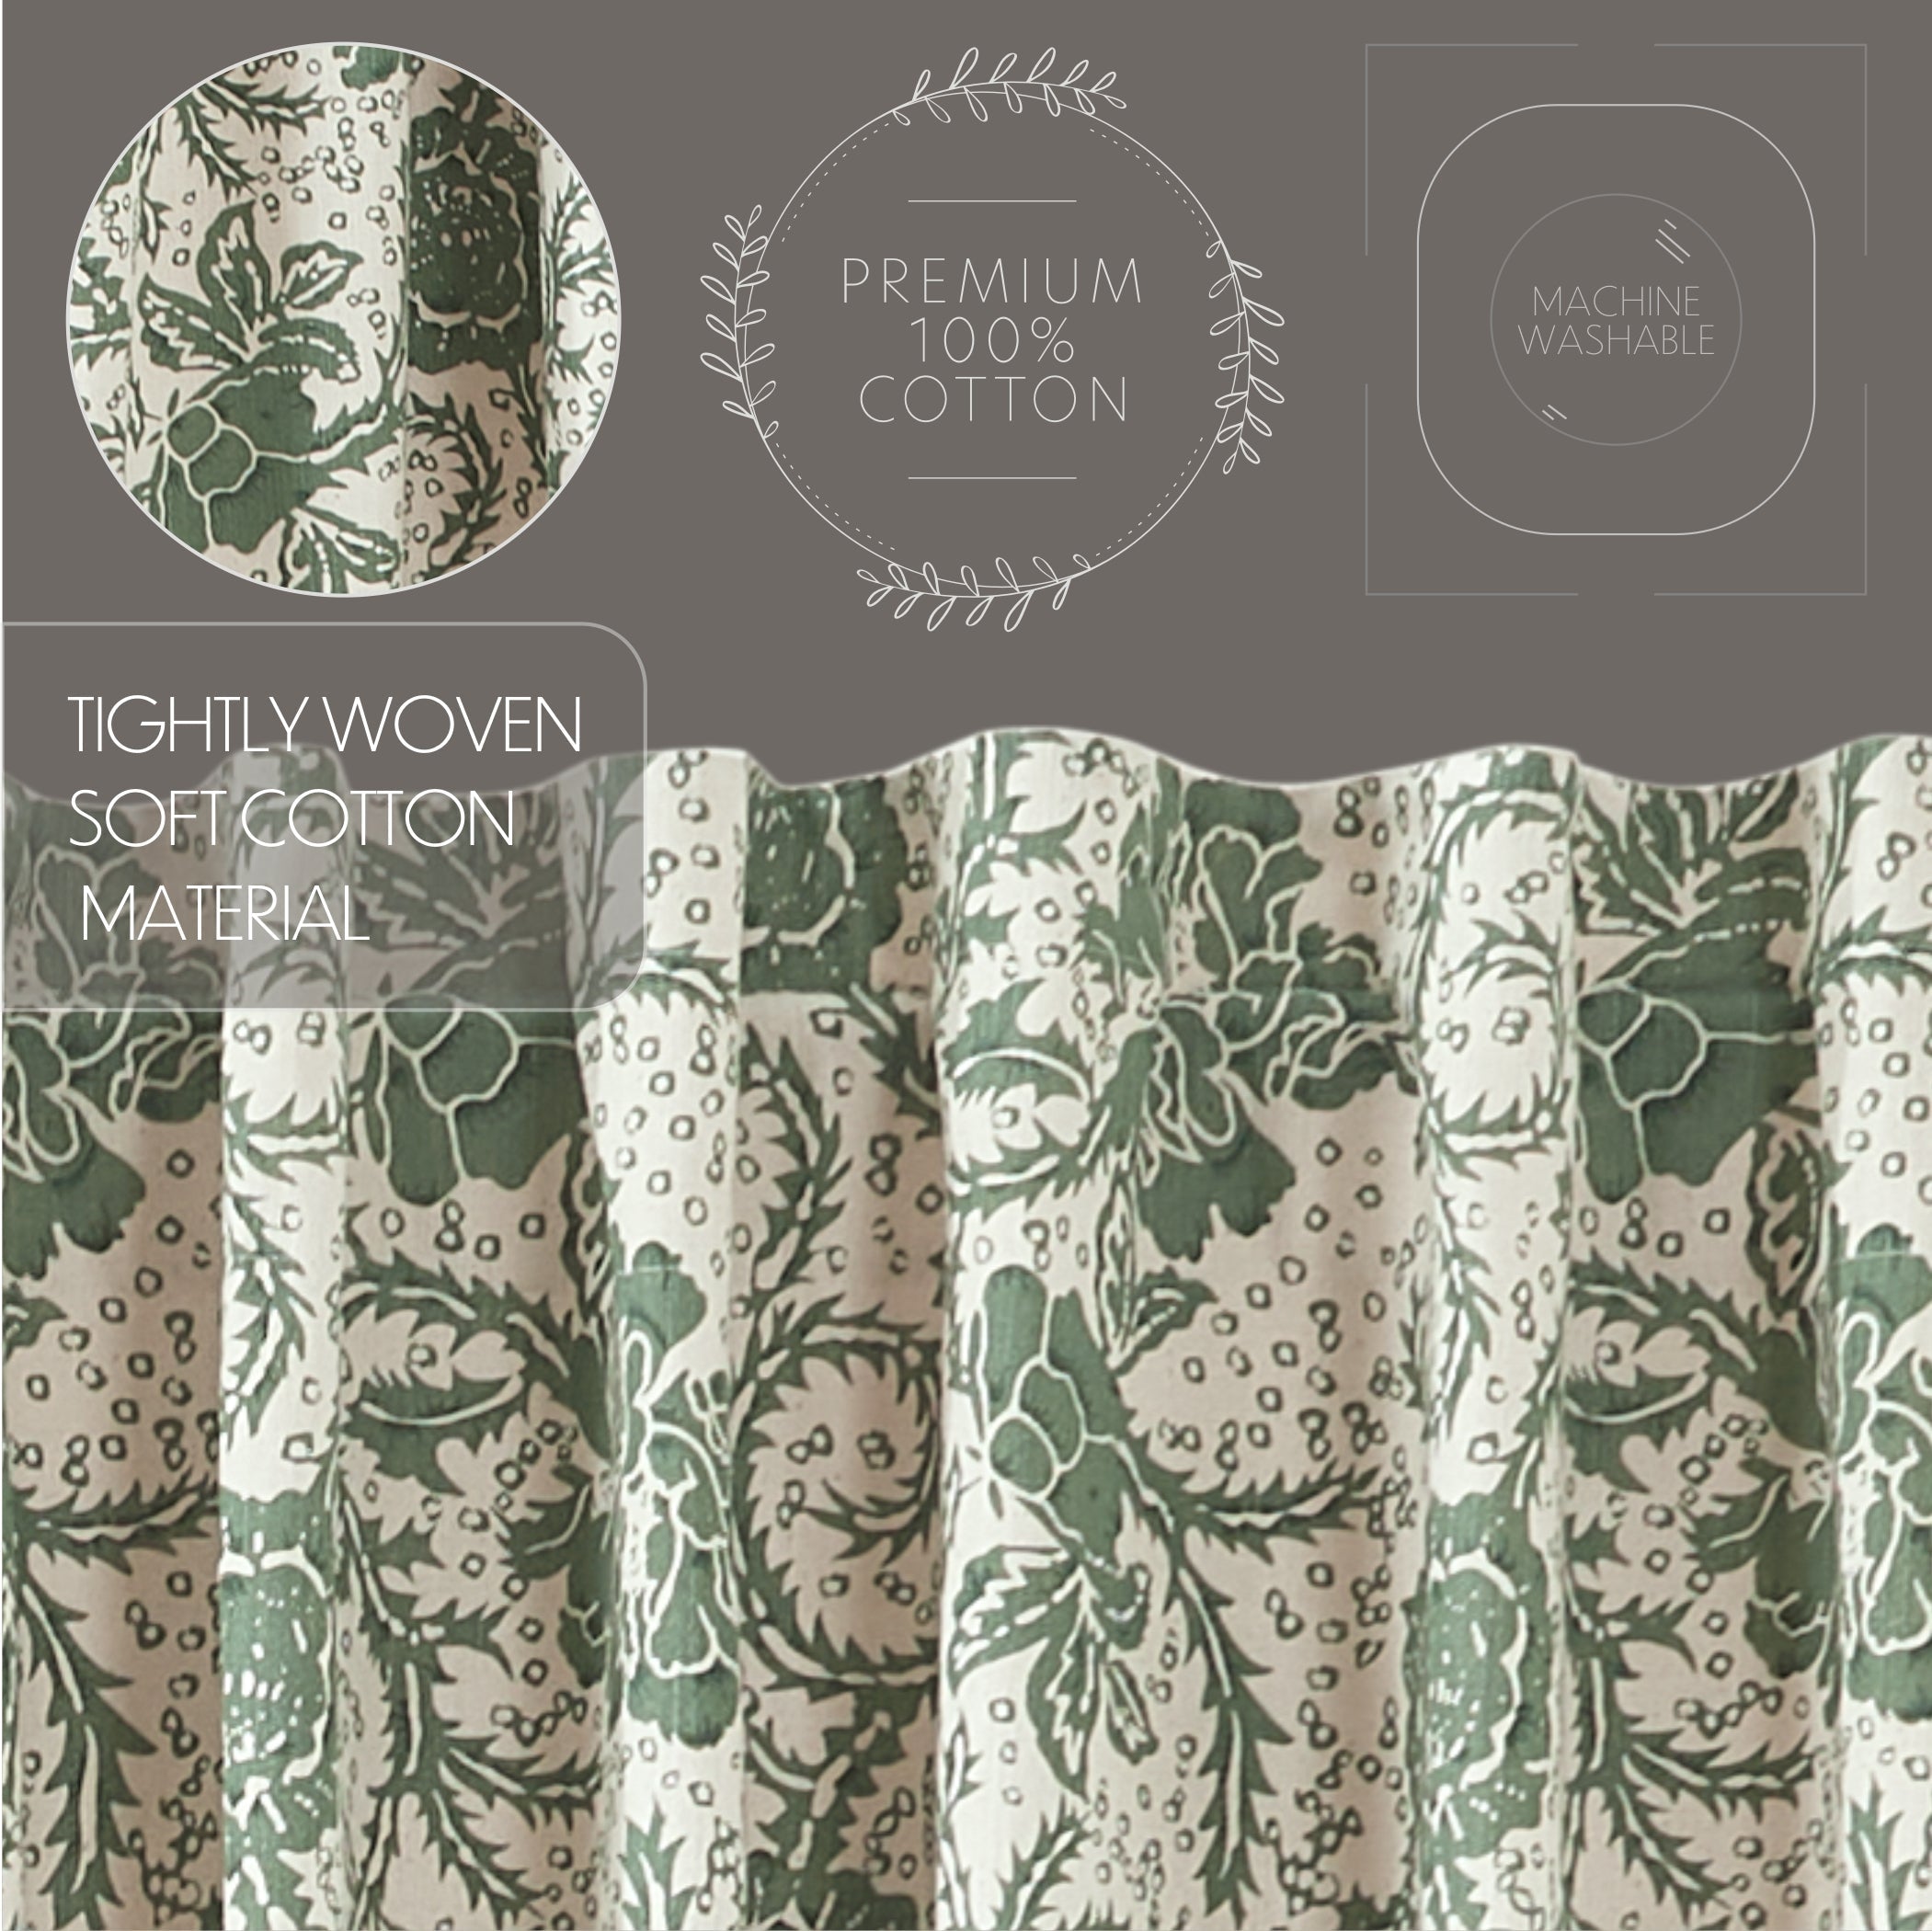 Dorset Green Floral Valance Curtain 16x60 VHC Brands